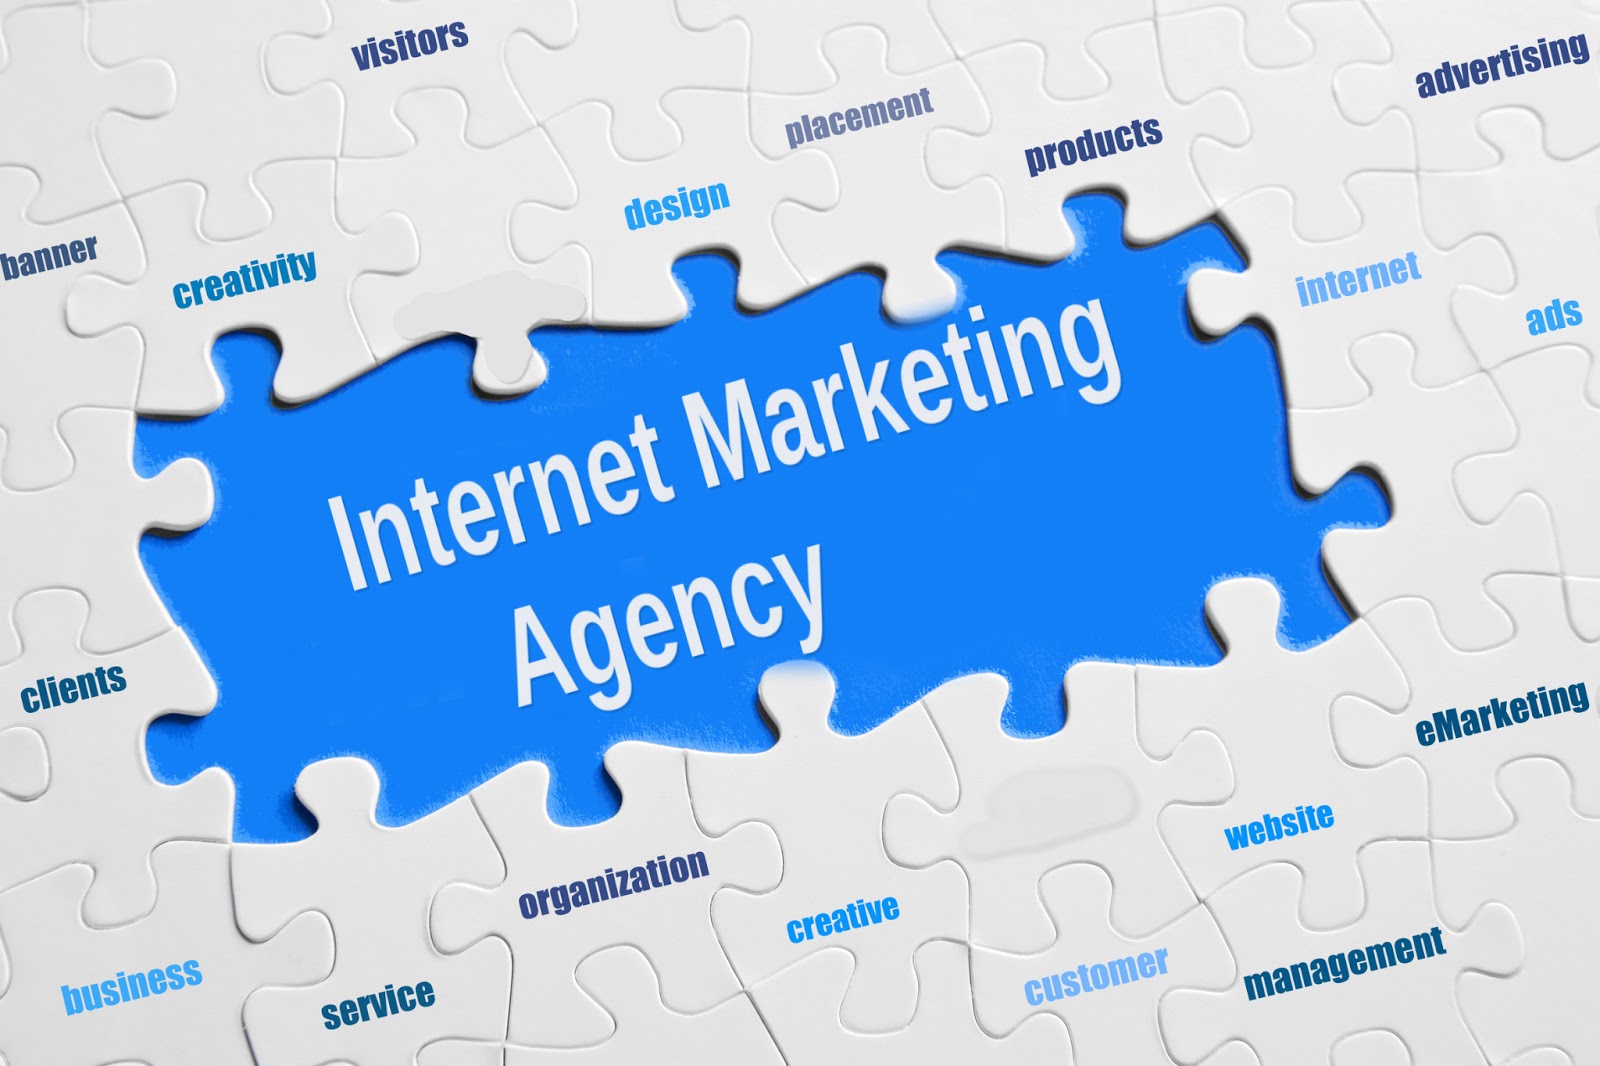 Internet marketing agency